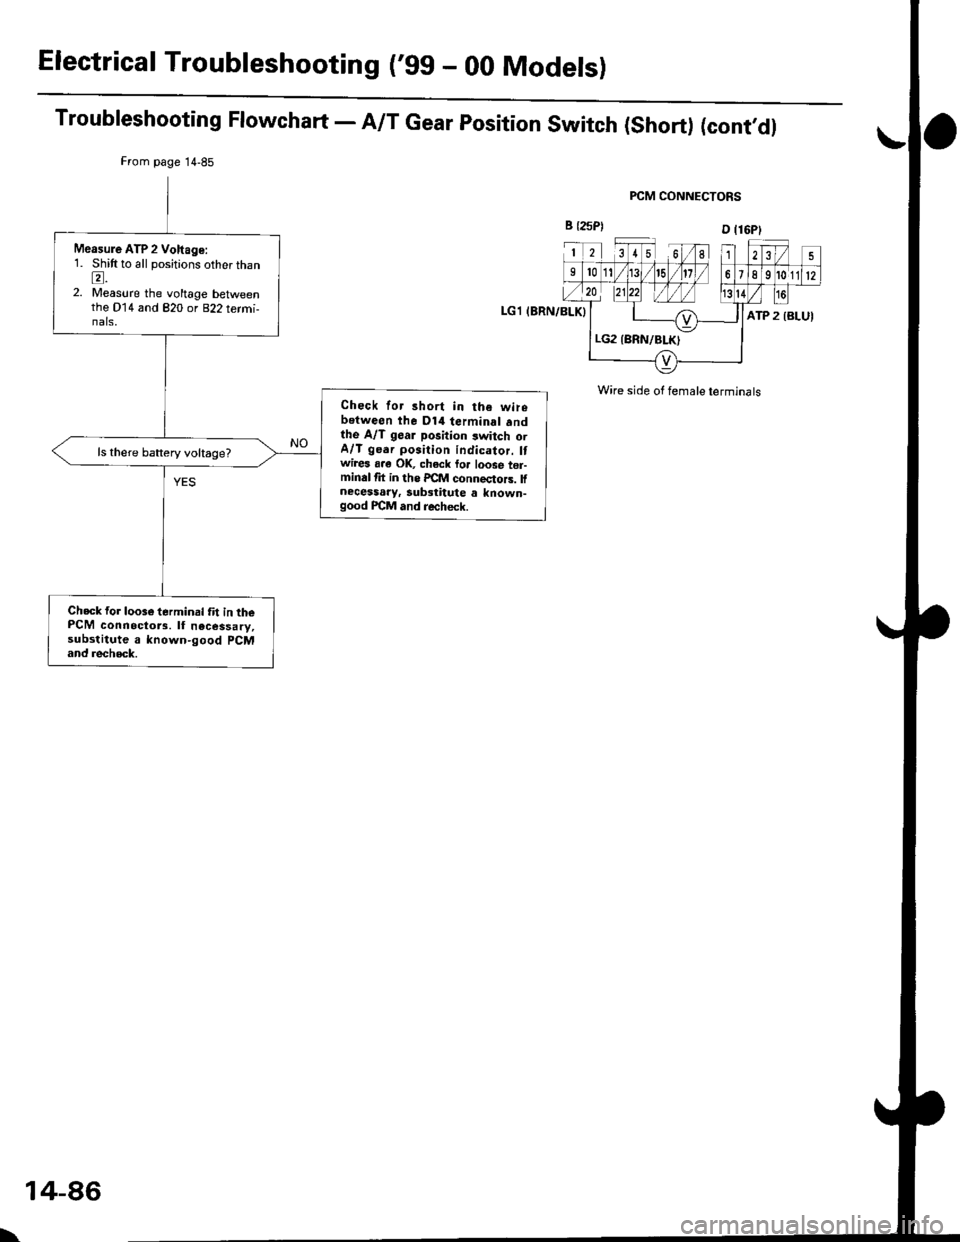 HONDA CIVIC 1998 6.G Workshop Manual ElectricalTroubleshooting (gg - 00 Models)
Troubleshooting Flowchart - A/T Gear position Switch (Short) (cont,dl
LGl (BRN/BLK}
FCM CONNECTORS
B {25P)D l16Pl
12[Ll81235
9101/113/ 151/)11789t0112,/ 20
